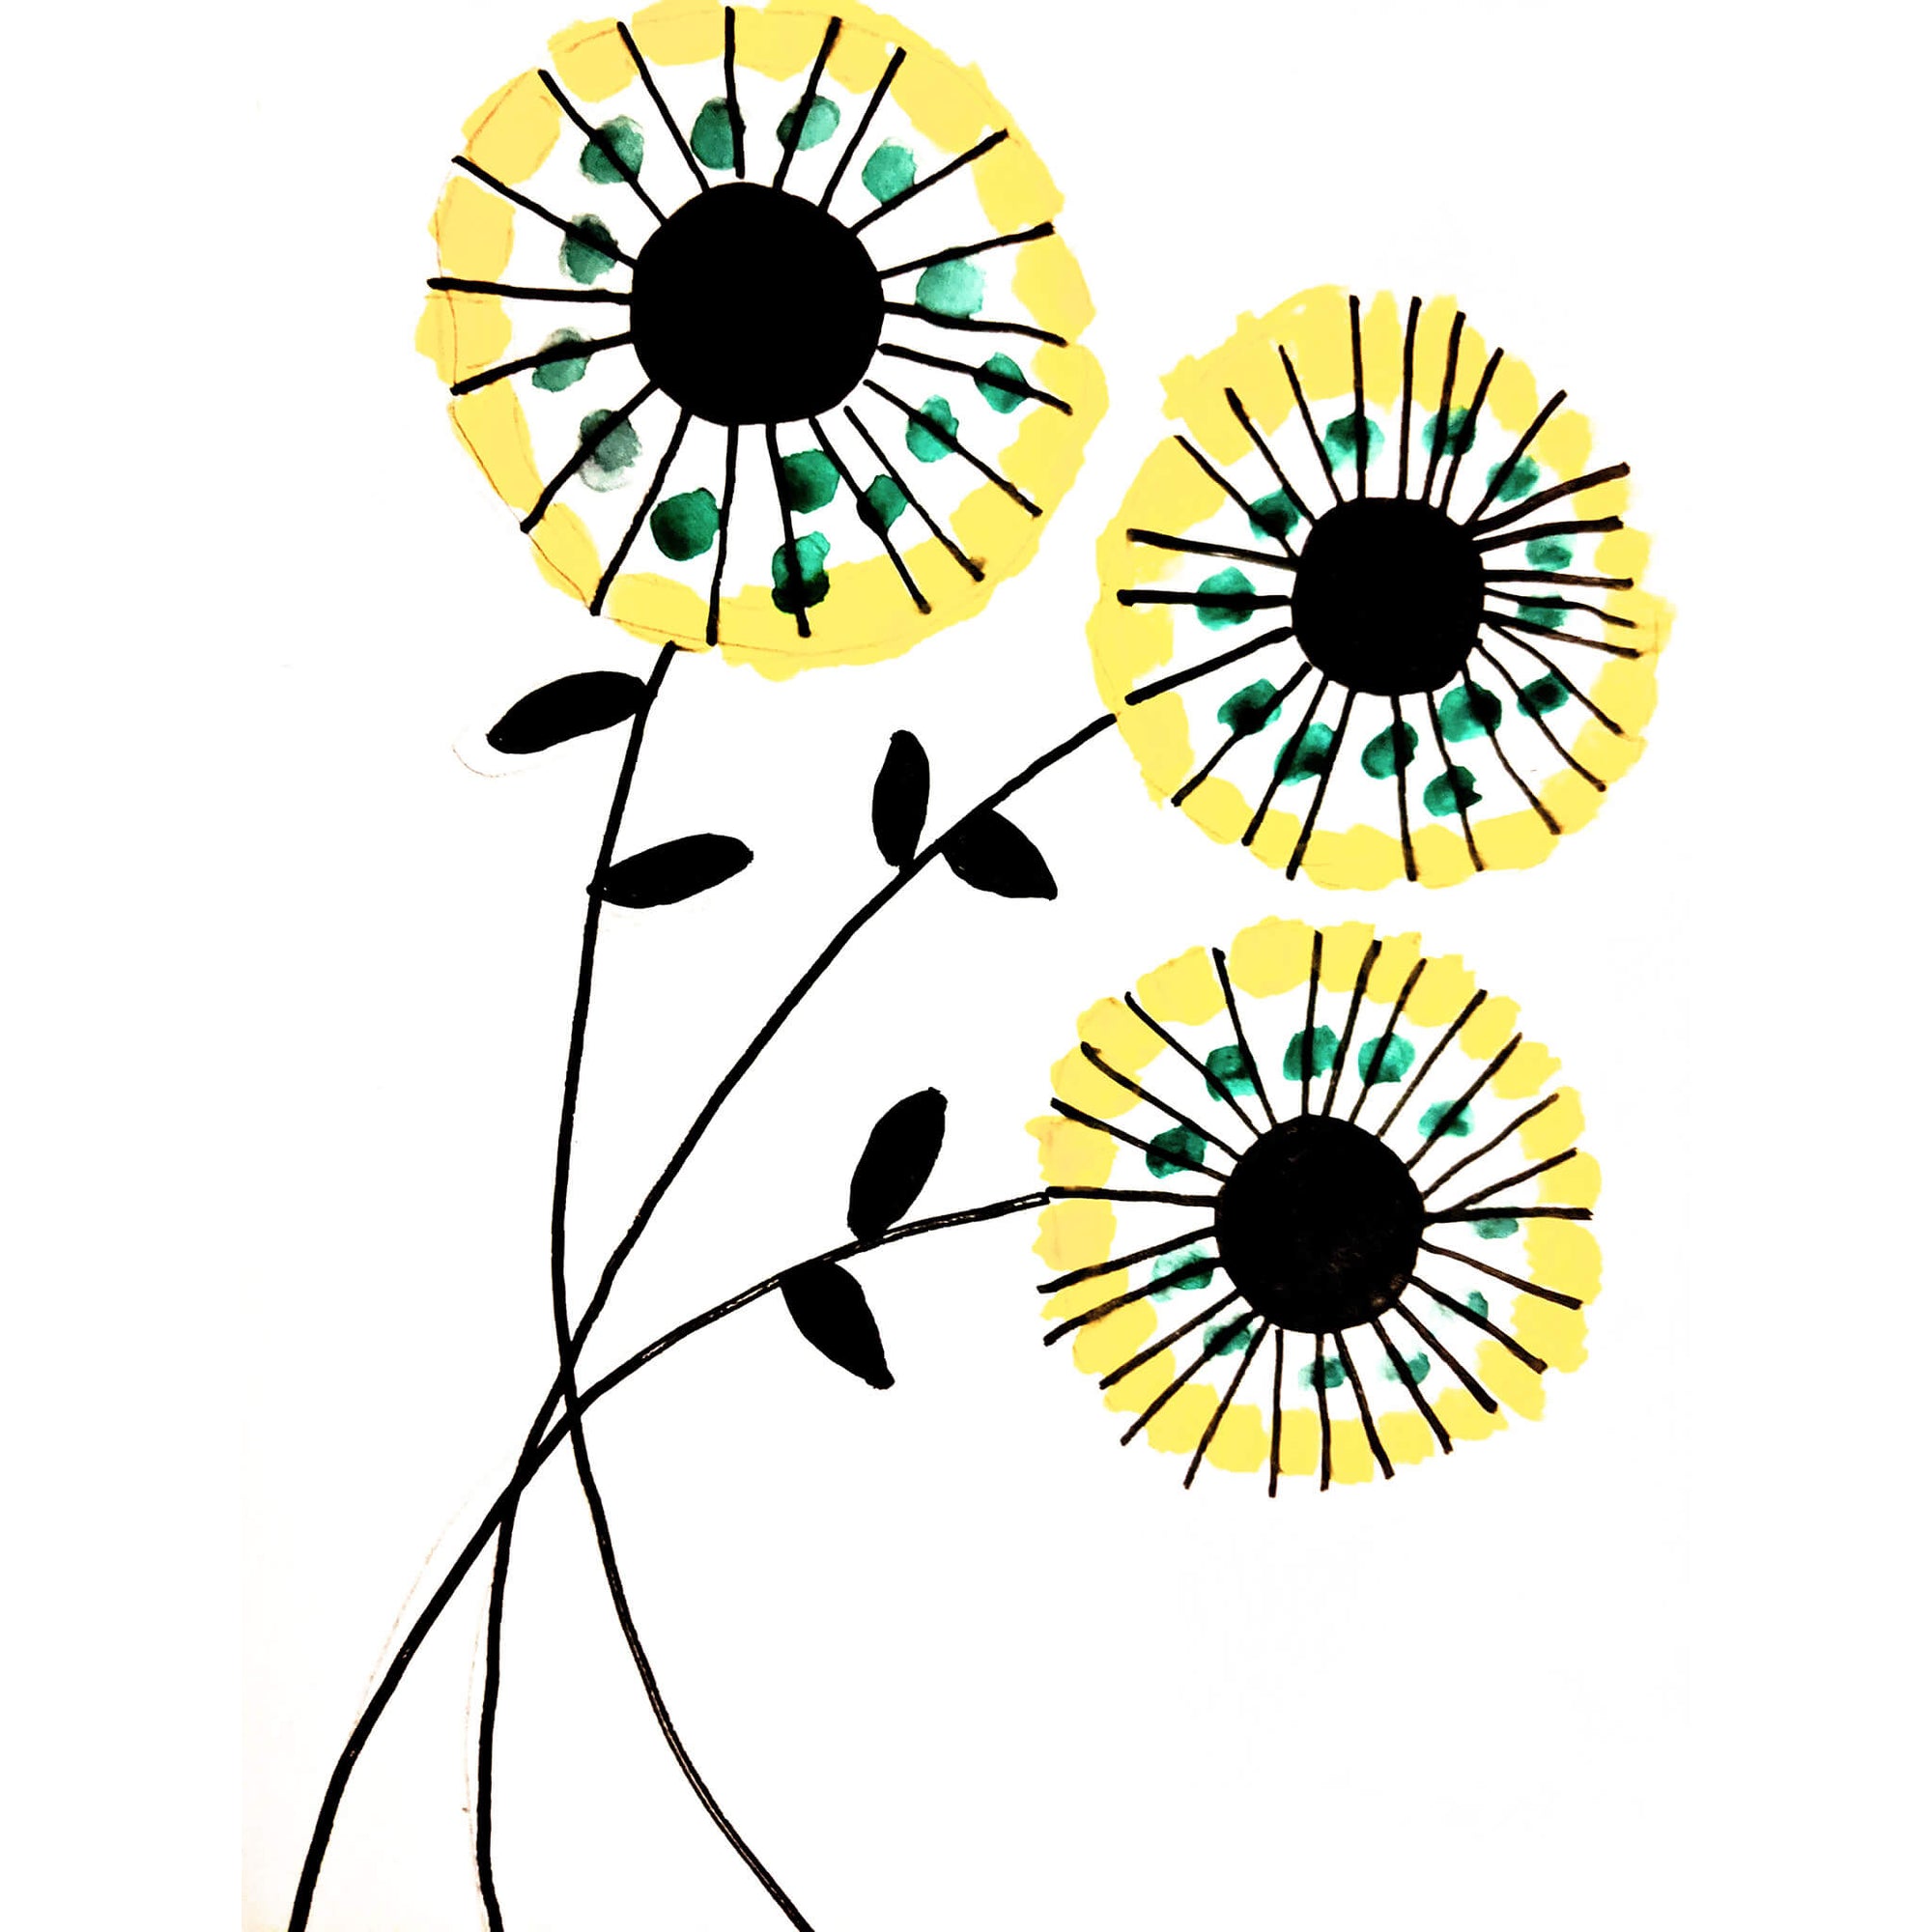 Flowering by Bukola Dagiloke fine art print featuring three yellow and green flowers